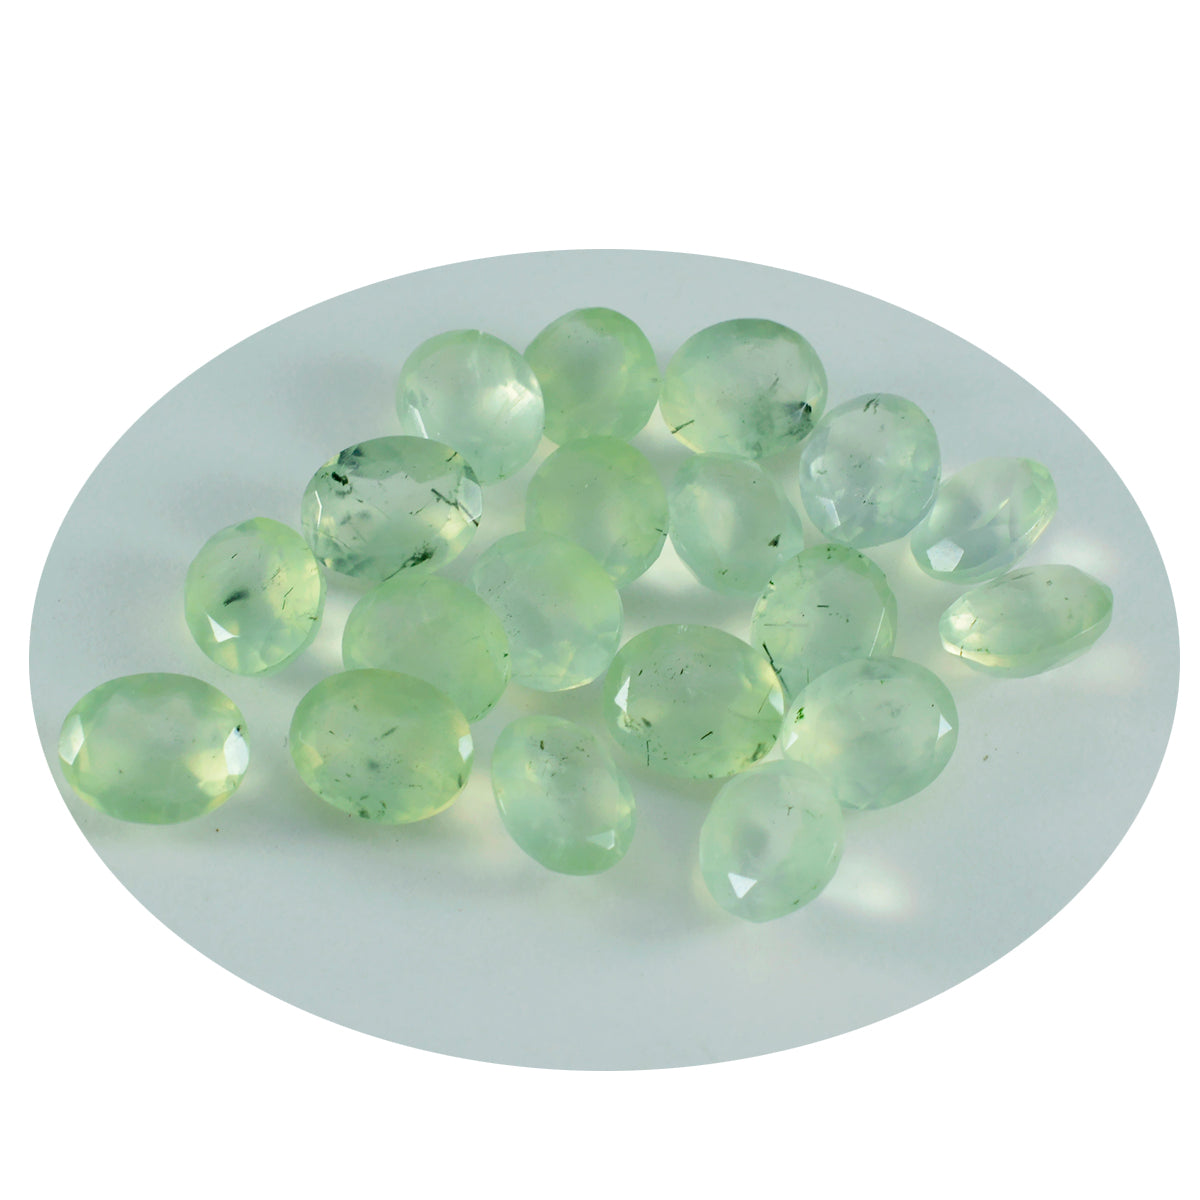 Riyogems 1PC Green Prehnite Faceted 5x7 mm Oval Shape attractive Quality Gemstone